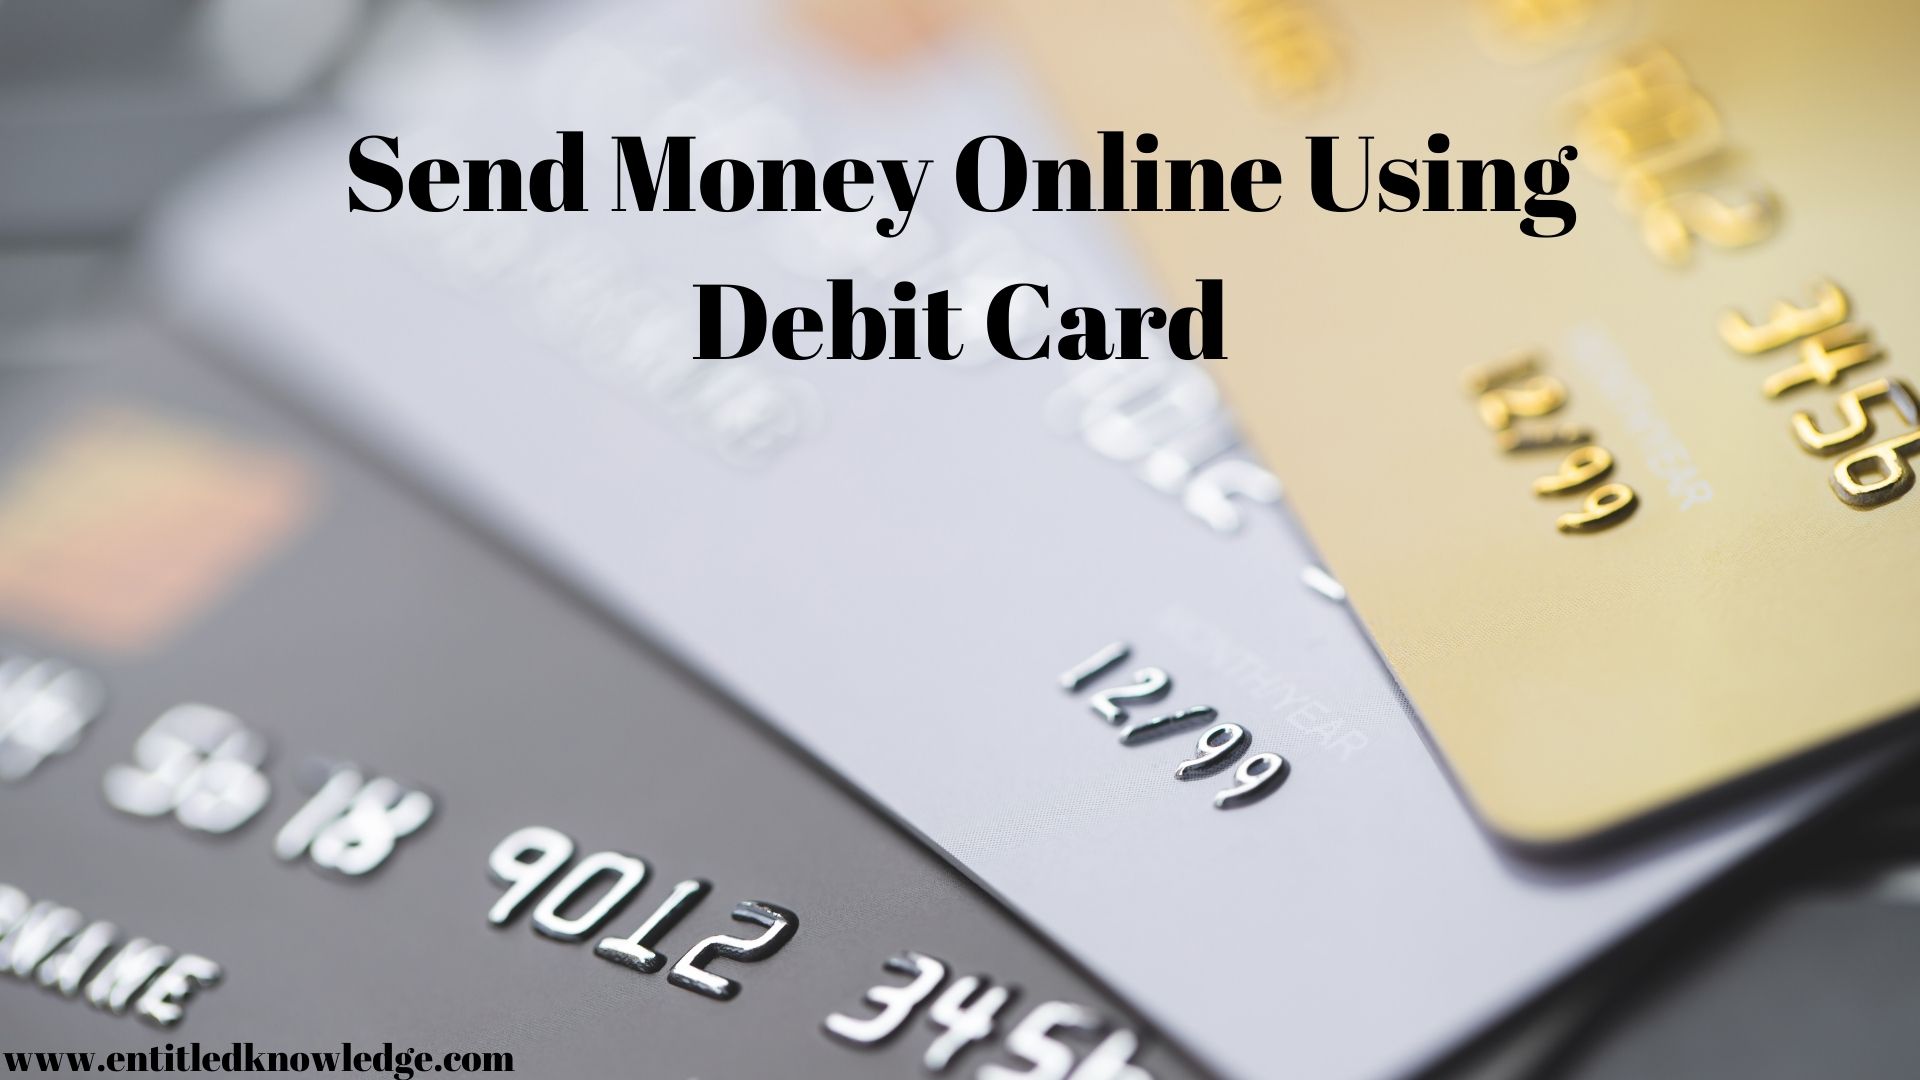 How To Send Money Online Using Debit Card